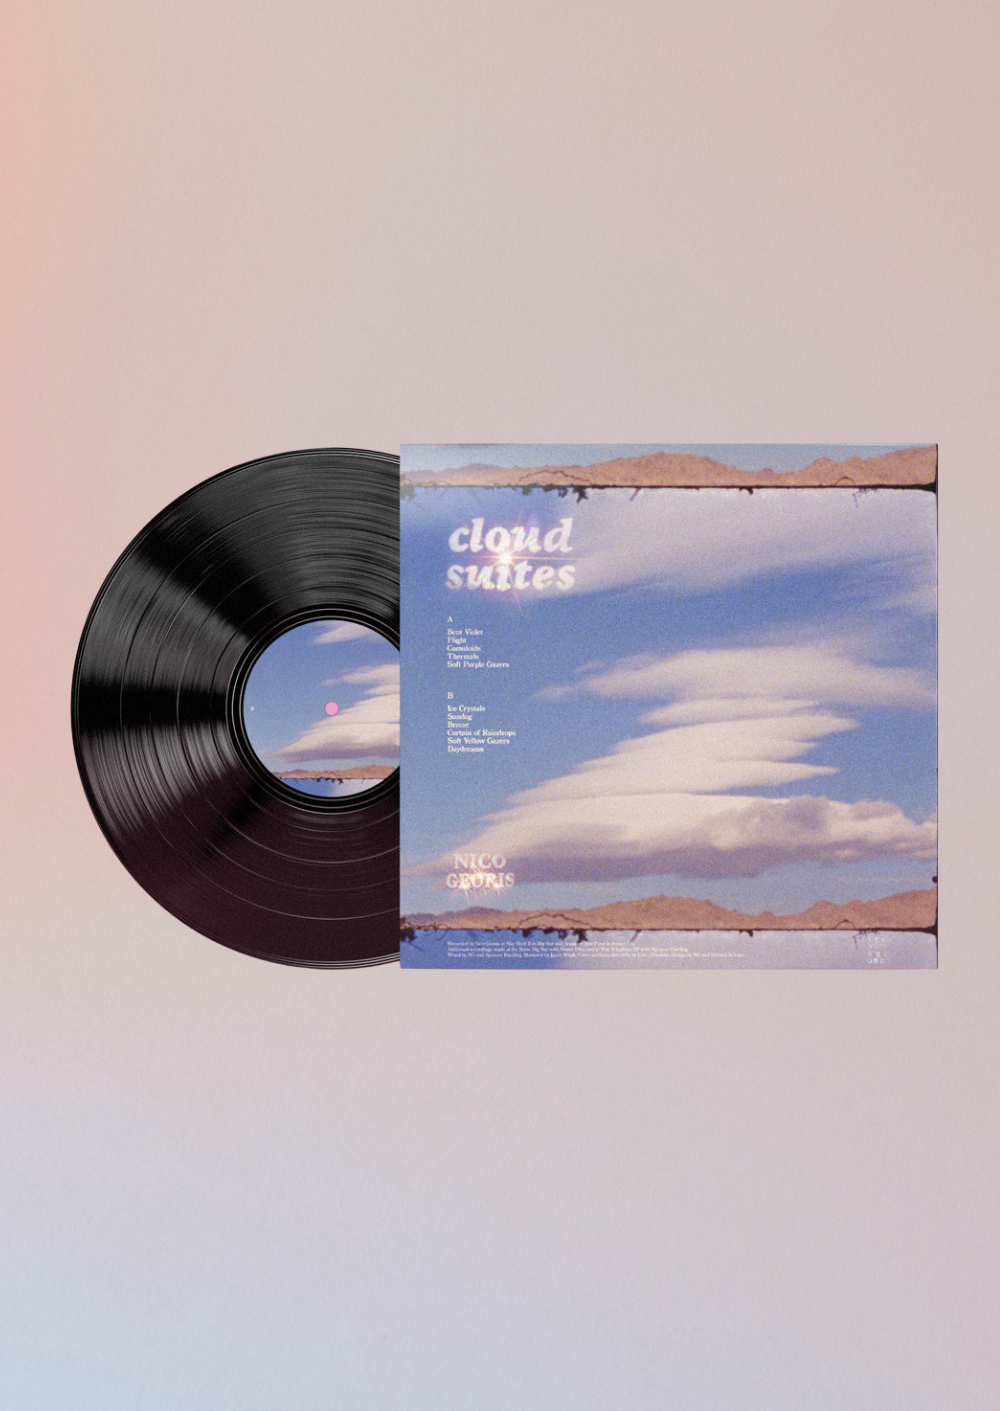 Nico Georis - Cloud Suites Vinyl Record